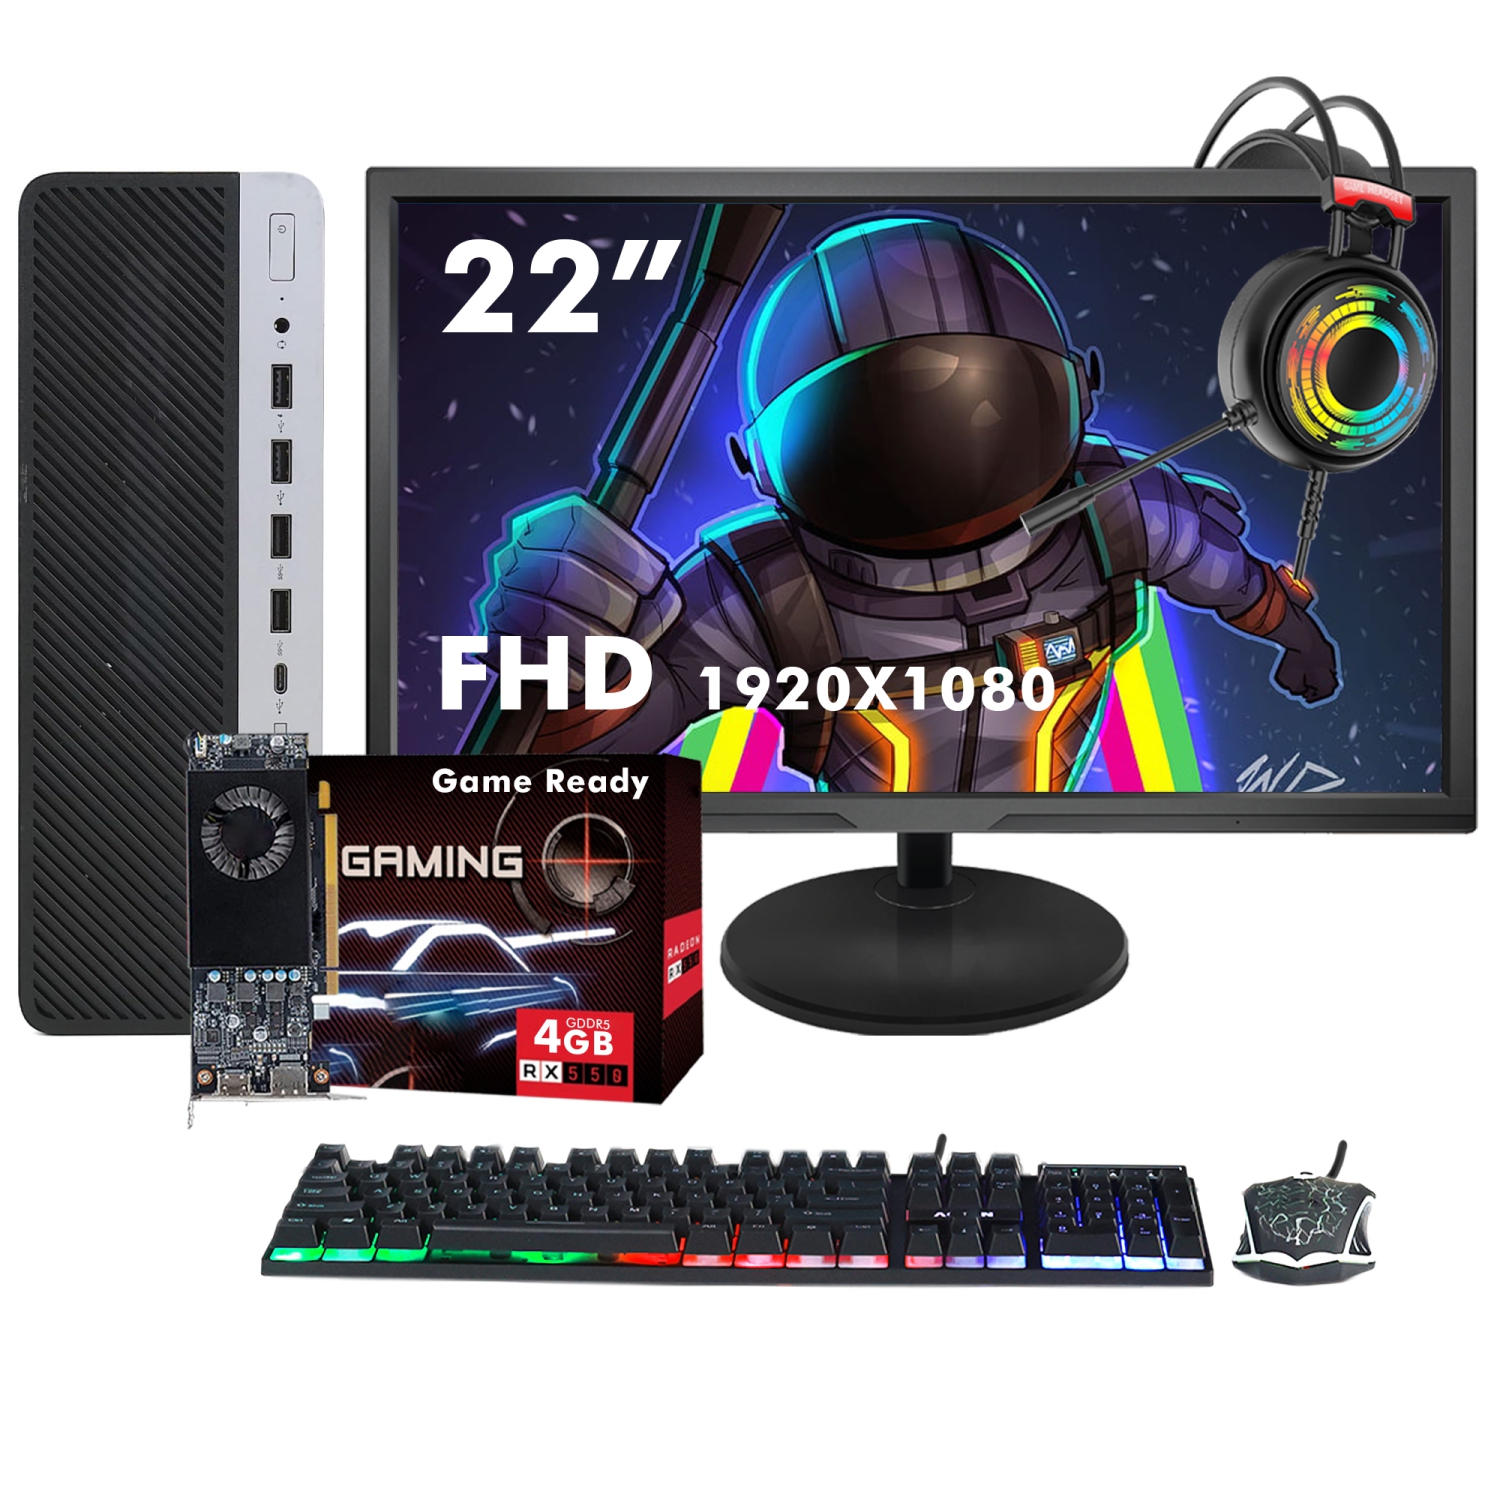 Refurbished (Good) HP ProDesk 600 G3 SFF Desktop - New 22-inch FHD Monitor, Intel Core i5-6th Gen, 16GB RAM, 512GB SSD, RX 550, Win 10 Pro, Gaming Headset - Gaming PC